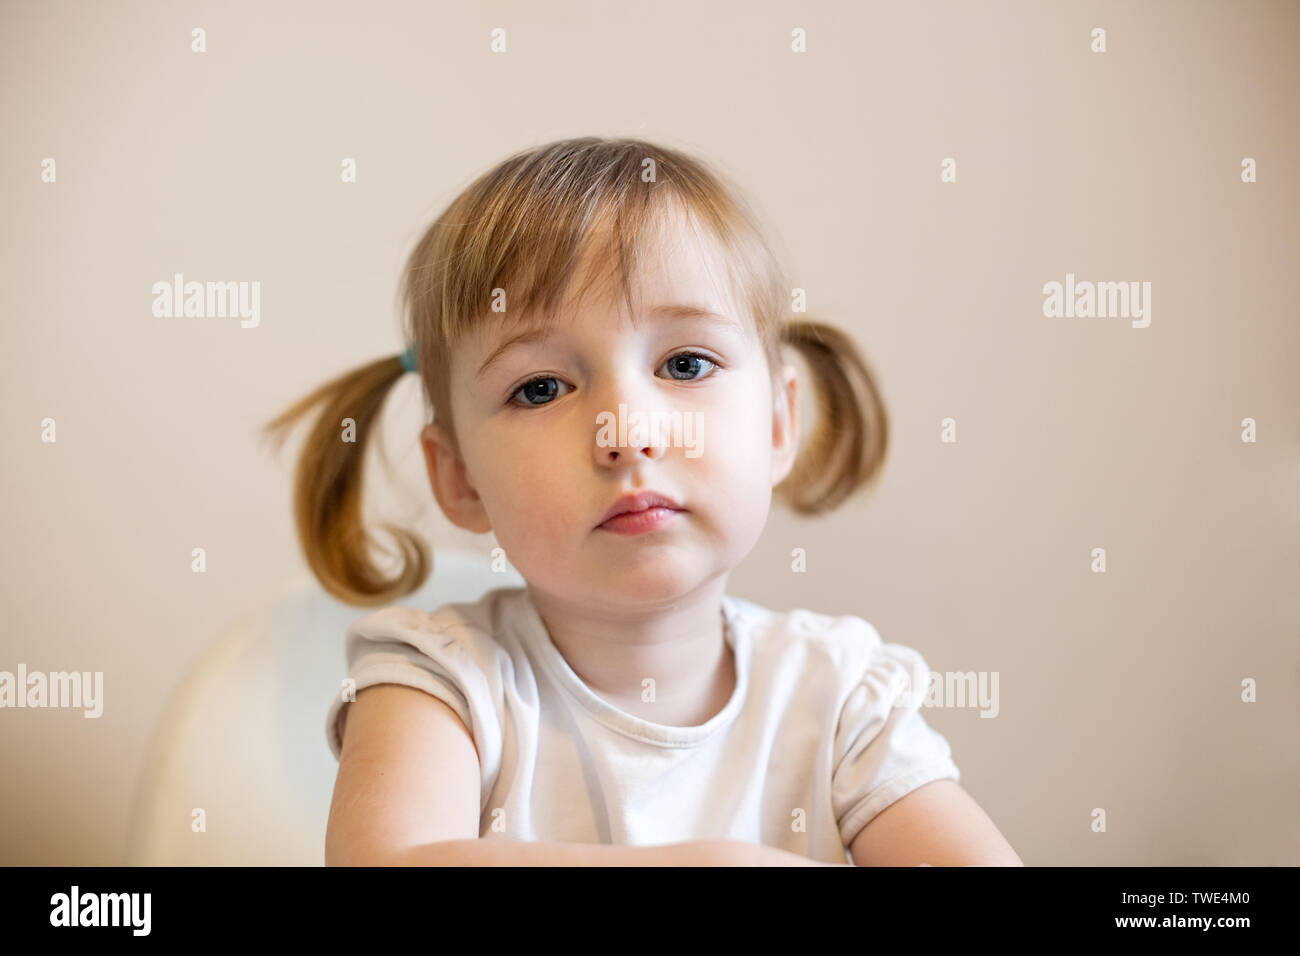 little kid Caucasian girl face closeup cute portrait with pigtails on plain background Stock Photo